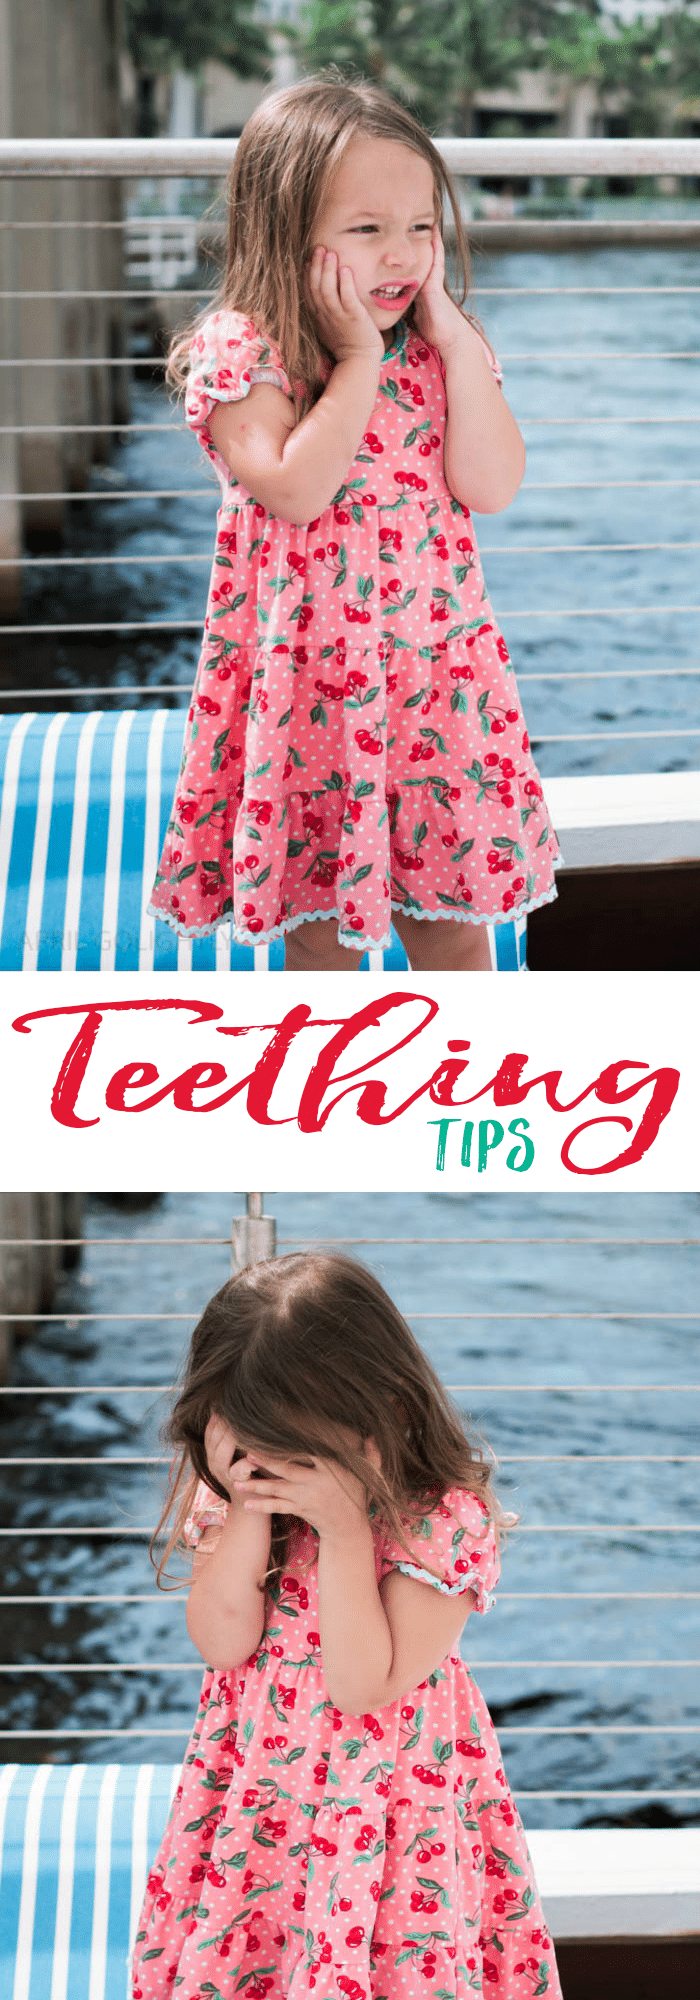 Teething-tips